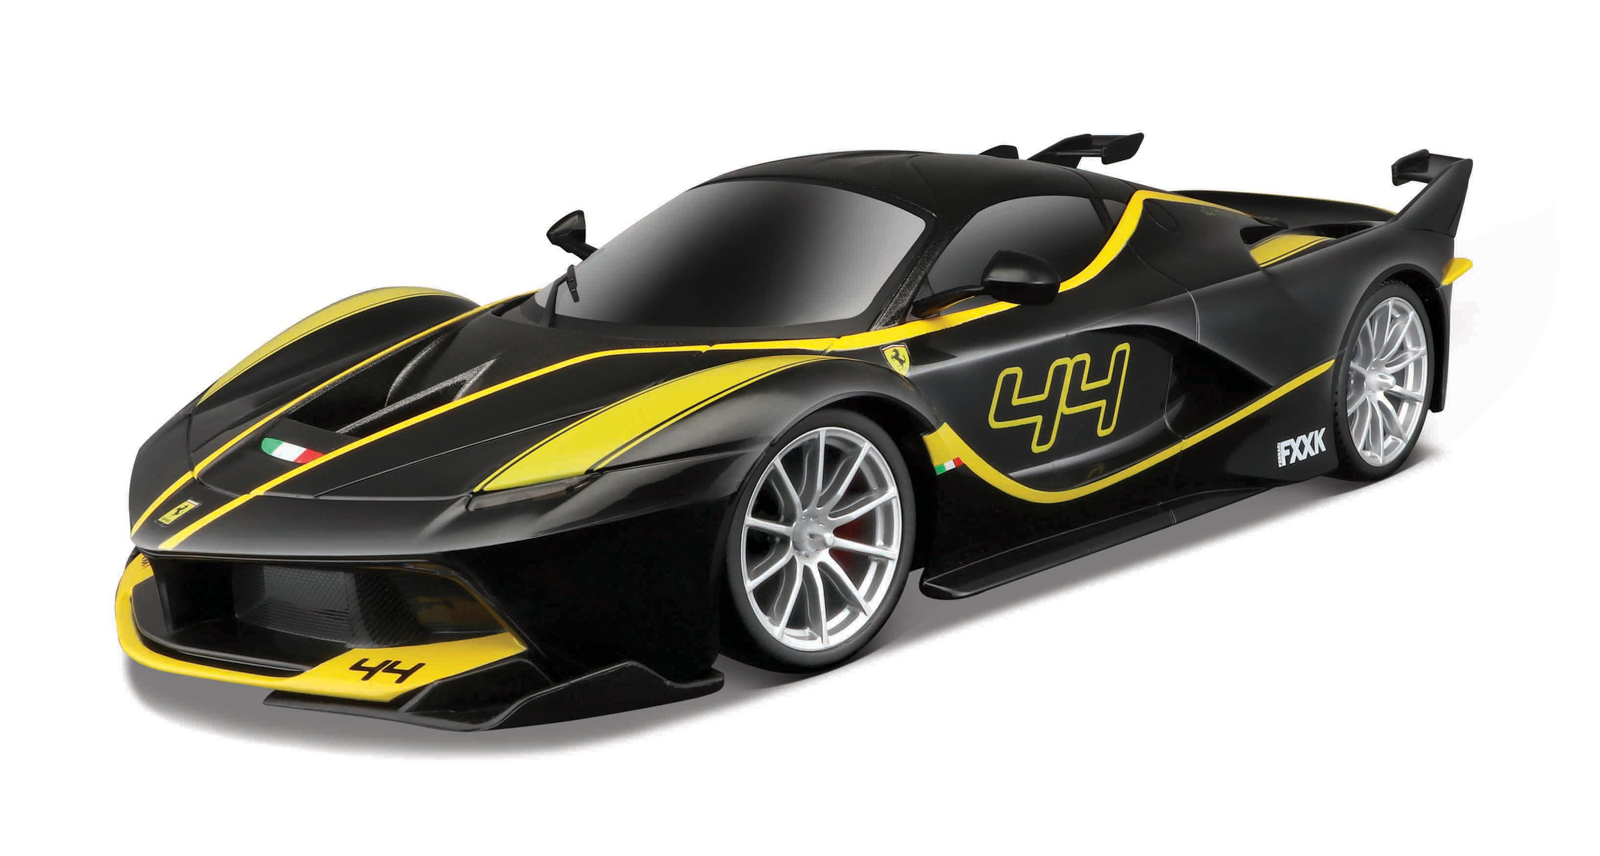 Maisto RC - 1:14 RC (2.4G, Cell battery) ~ Ferrari FXX K, čierna